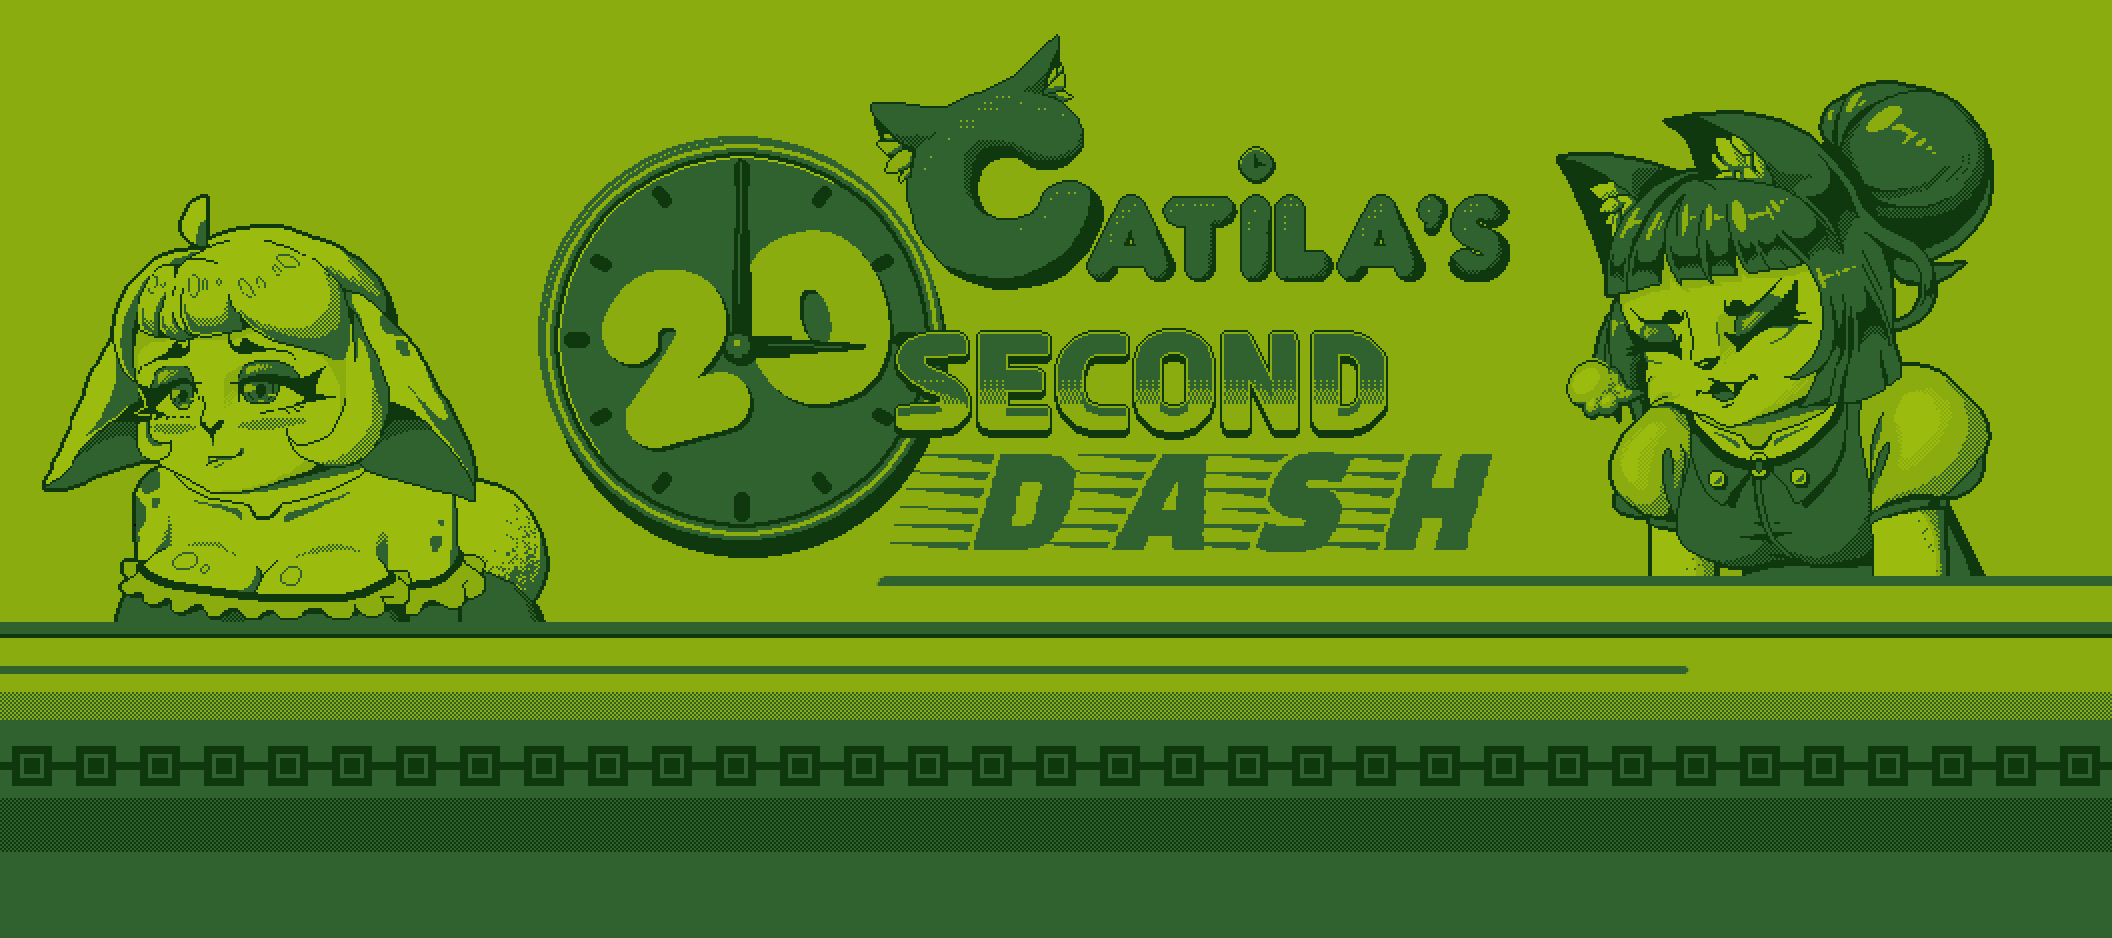 Catila's 20 Second Dash